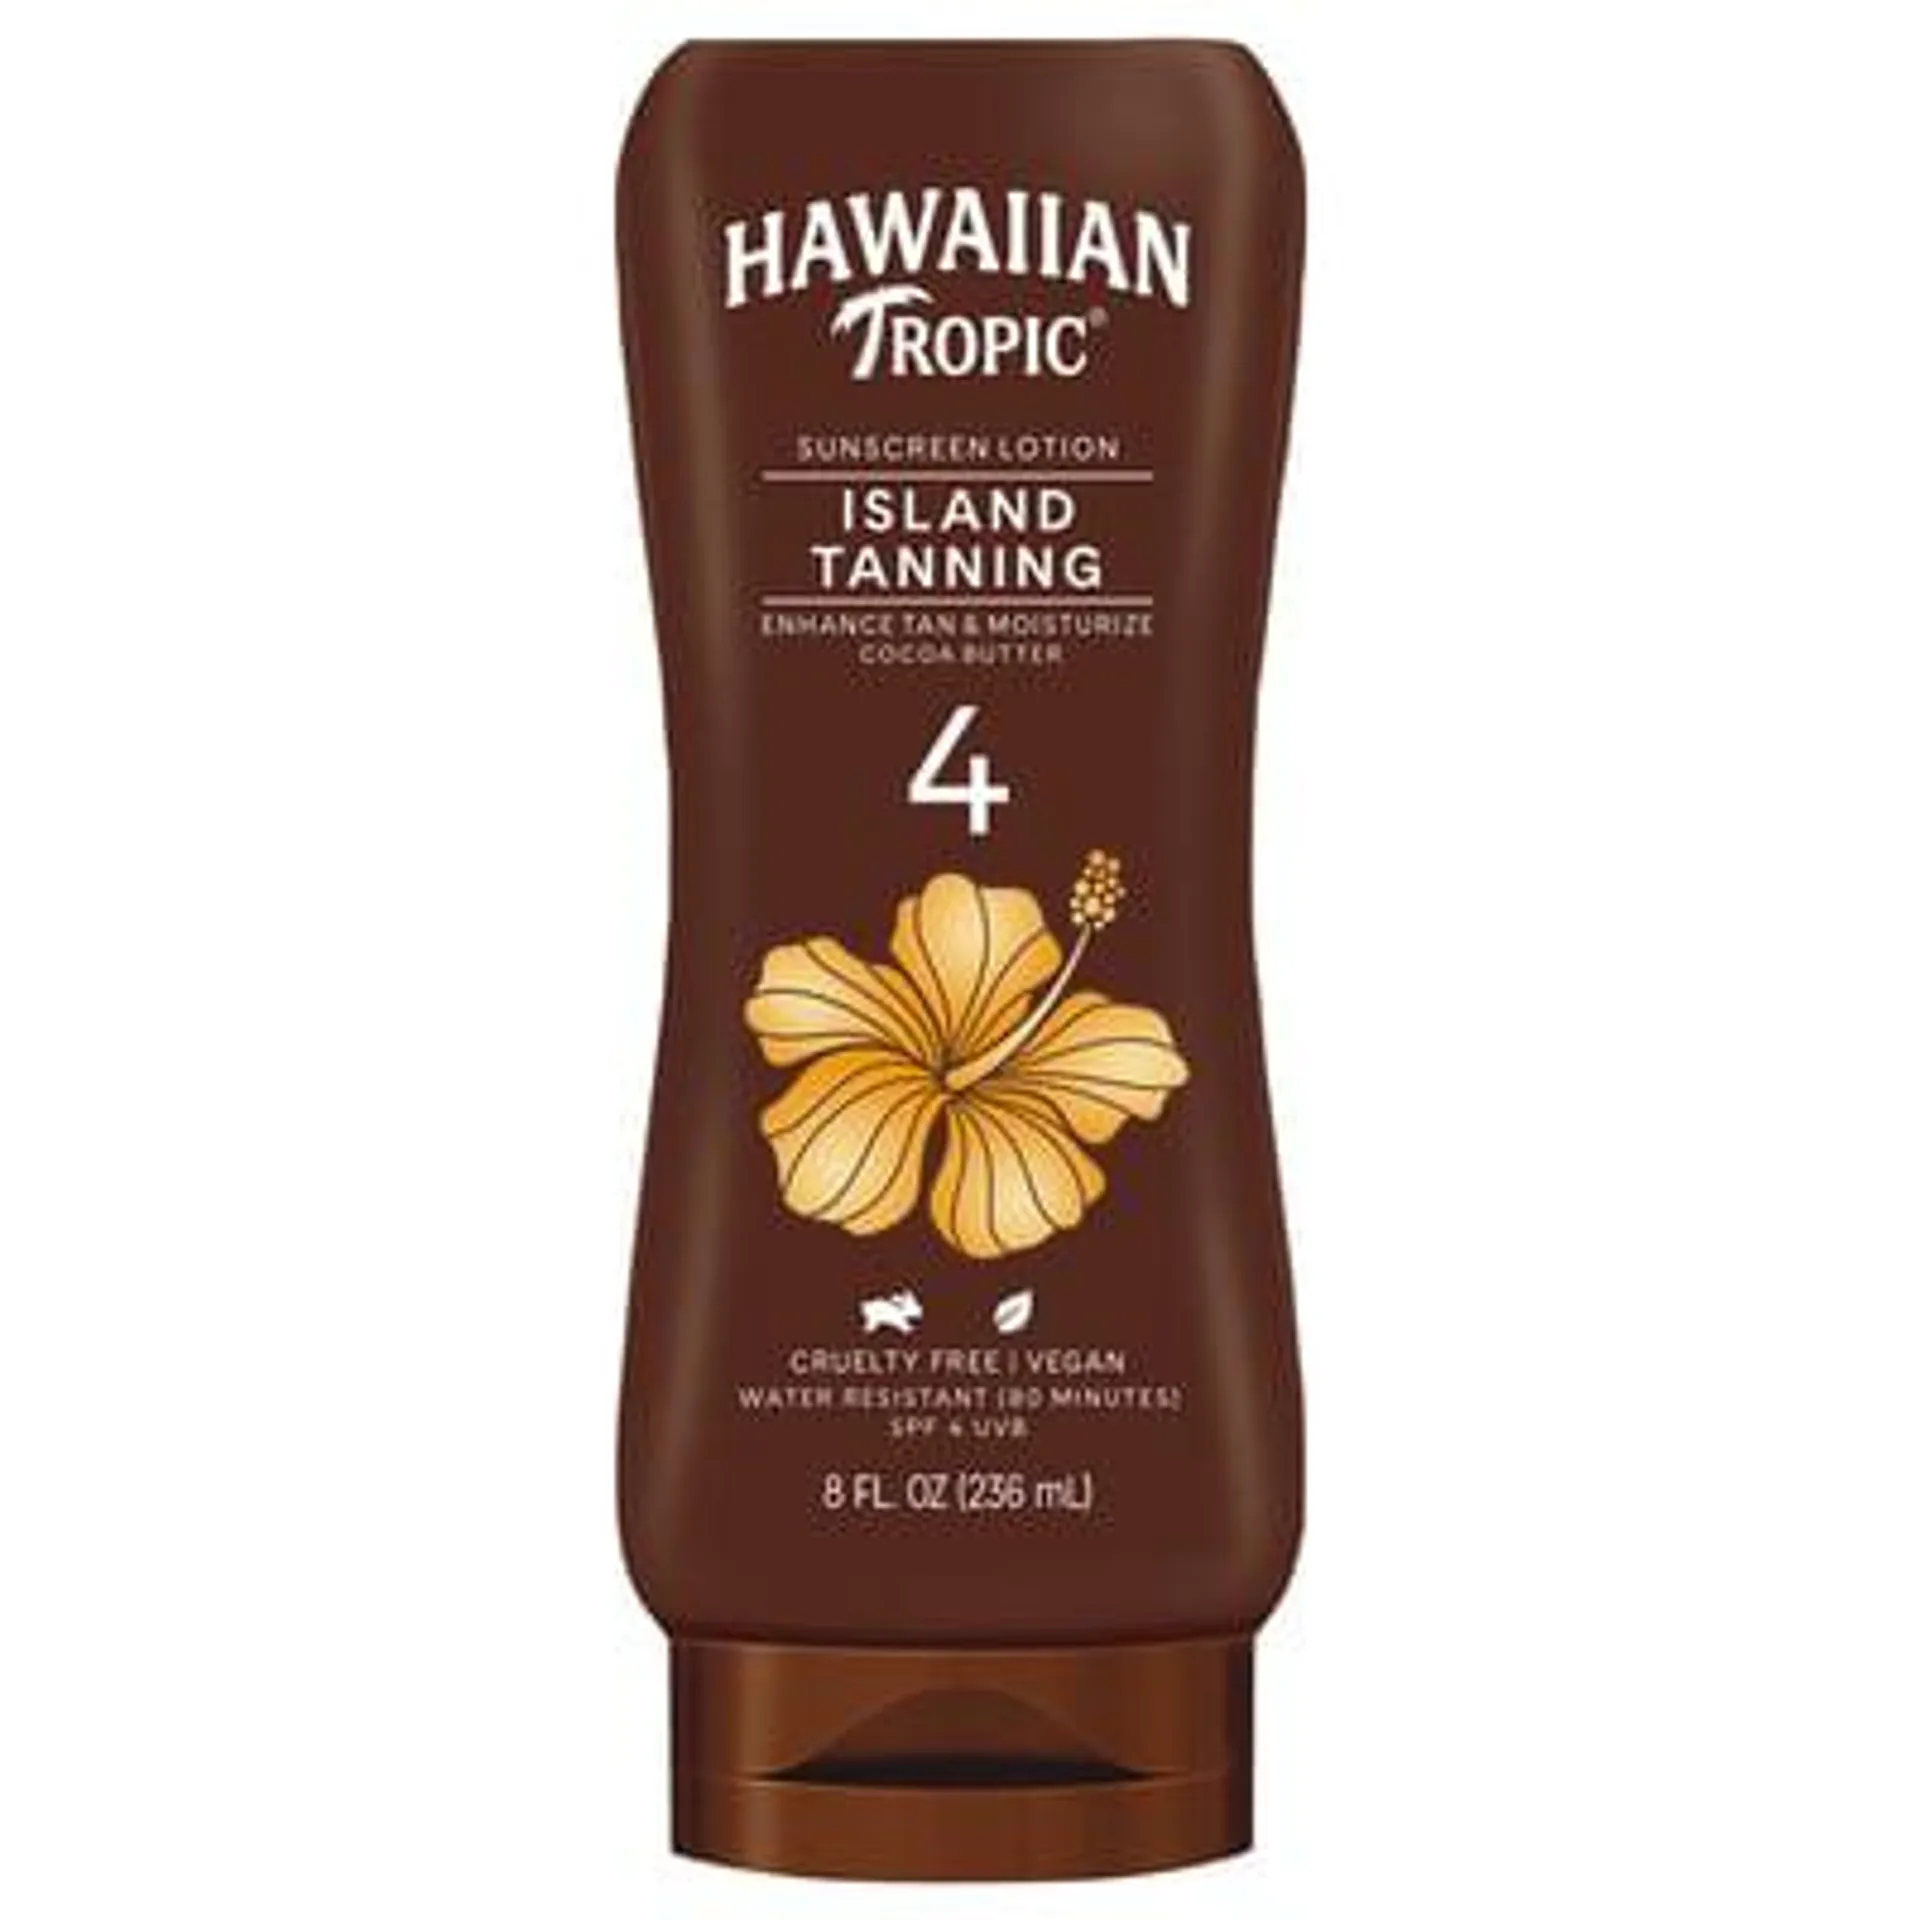 Hawaiian Tropic, Sunscreen Lotion, Island Tanning, SPF 4